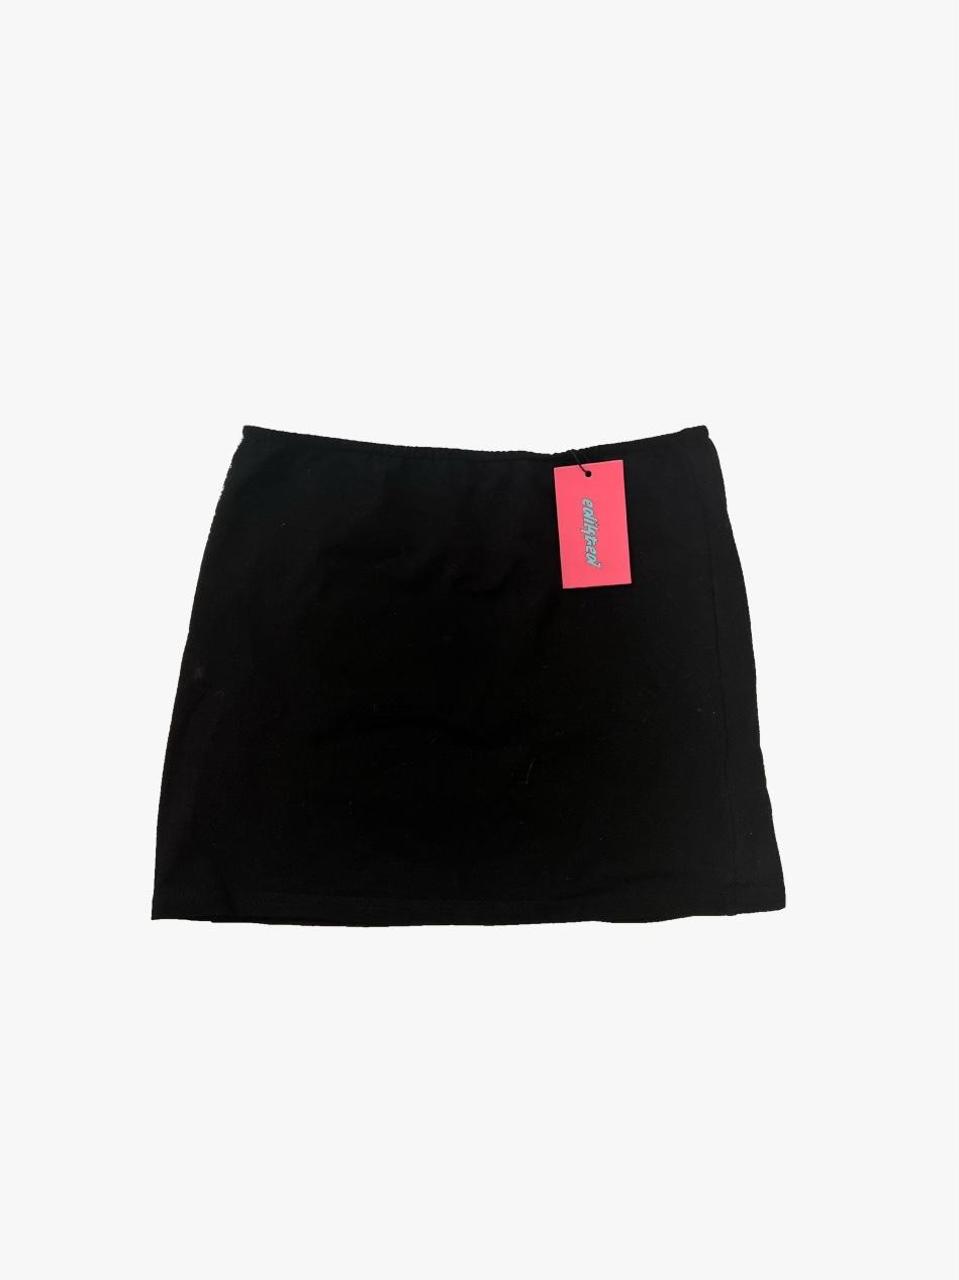 Edikted Low rise black mini skirt NWT!! Never worn - Depop